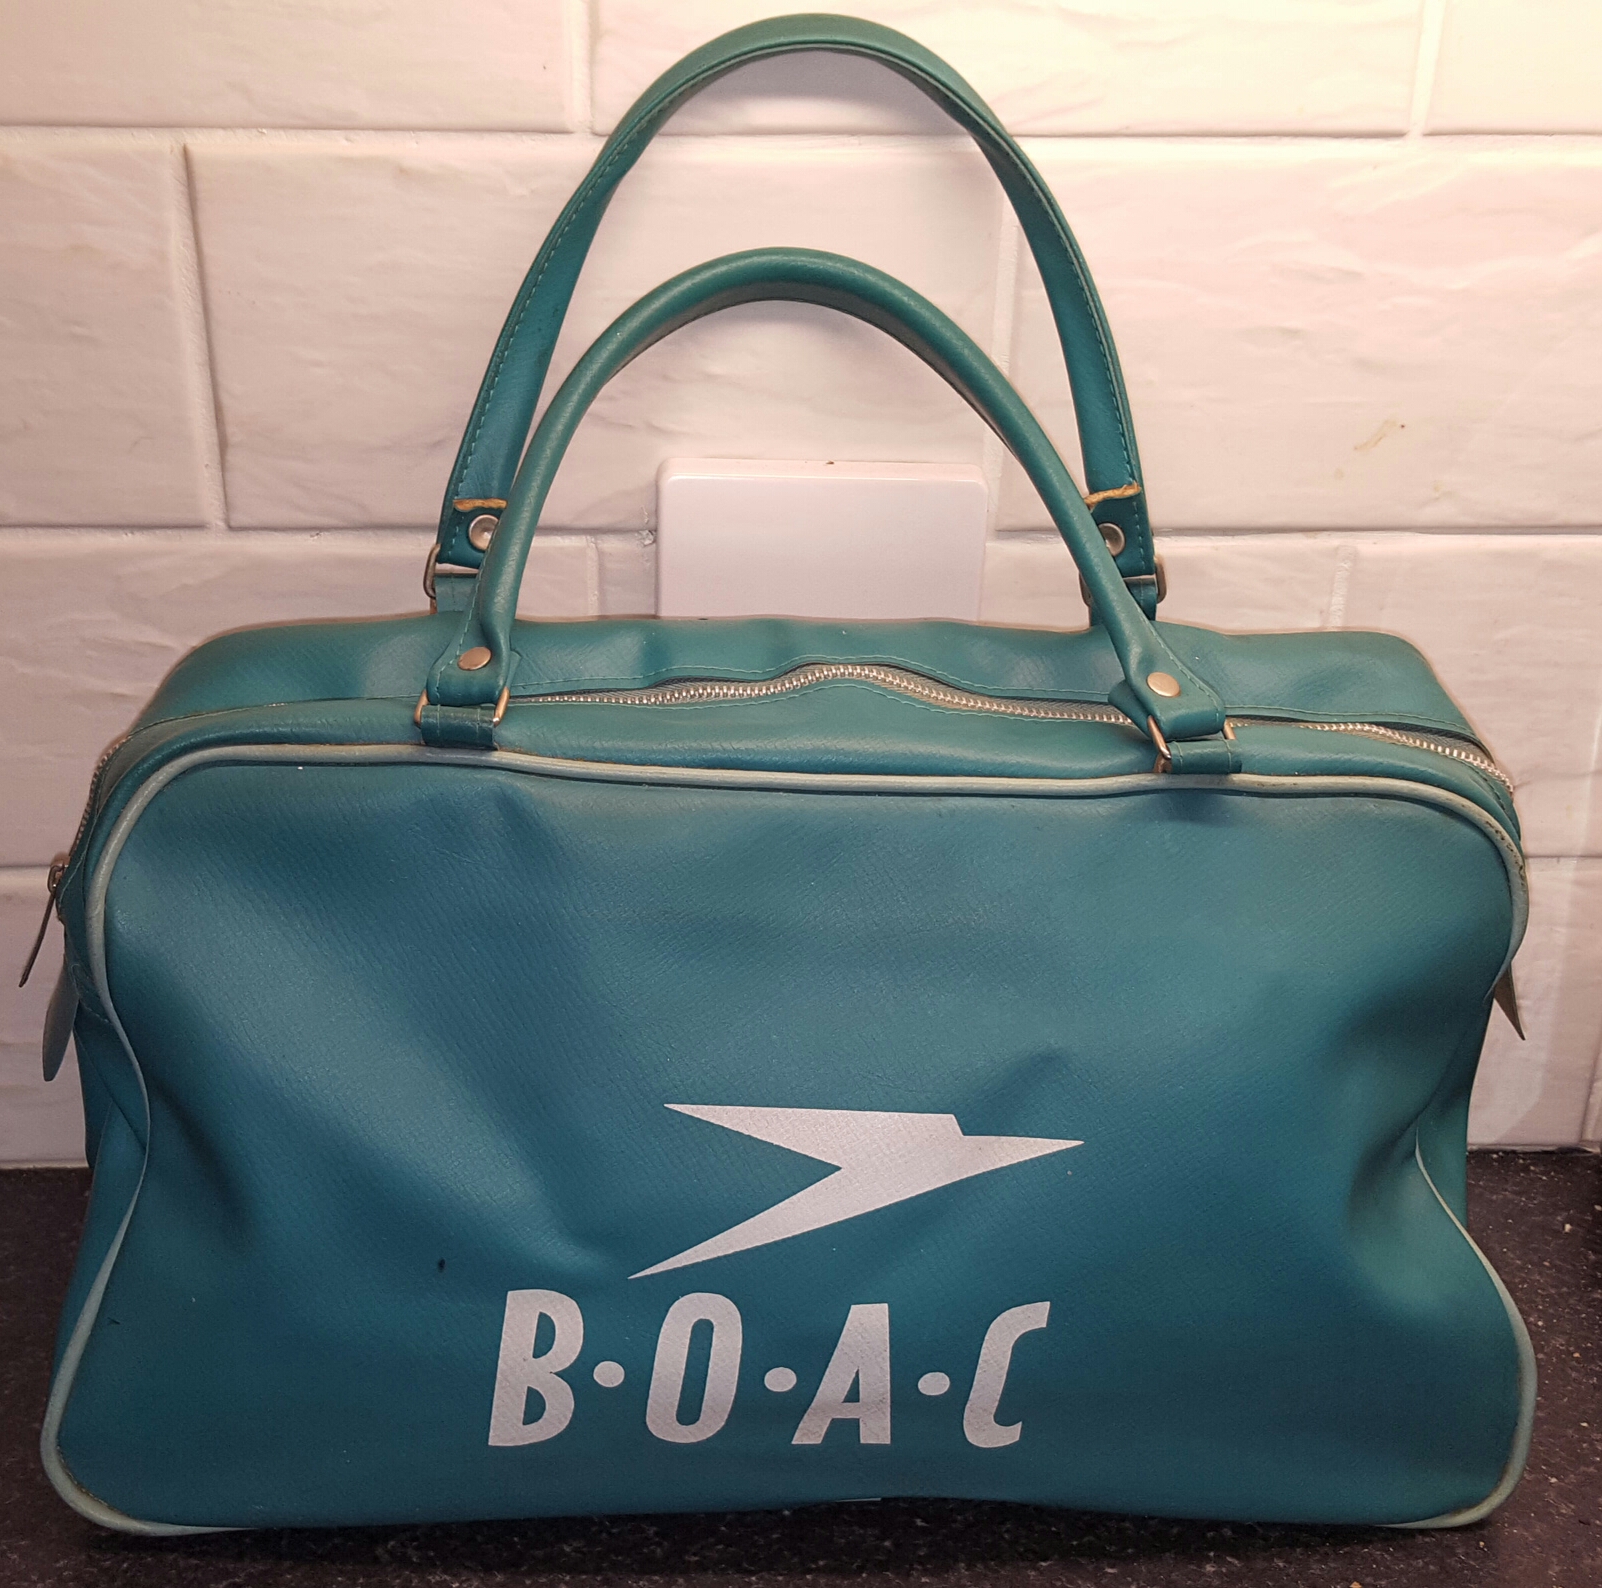 Vintage Retro BOAC Airline Bag